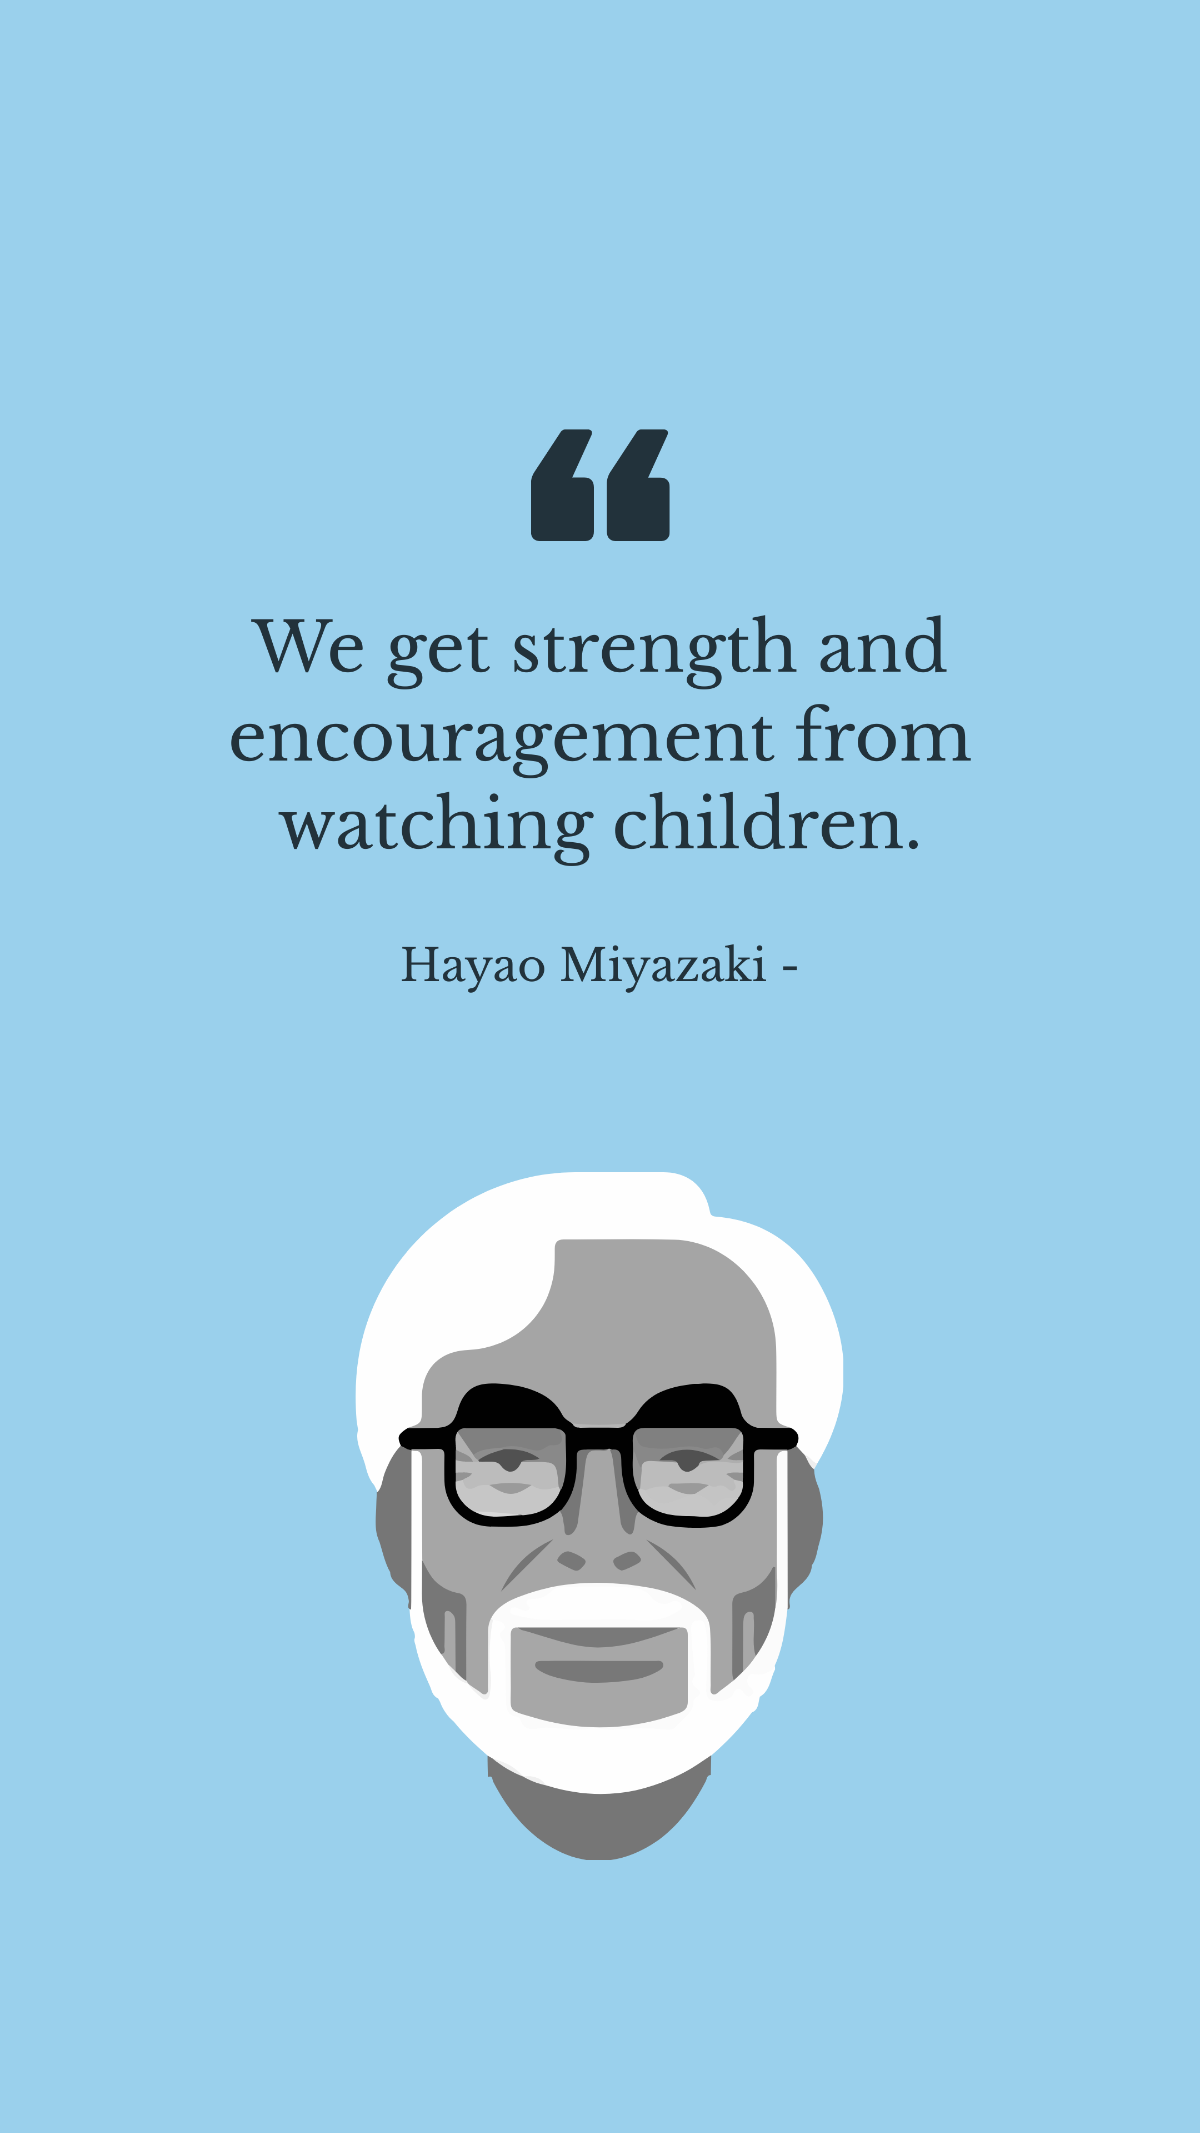 Hayao Miyazaki - We get strength and encouragement from watching children. Template